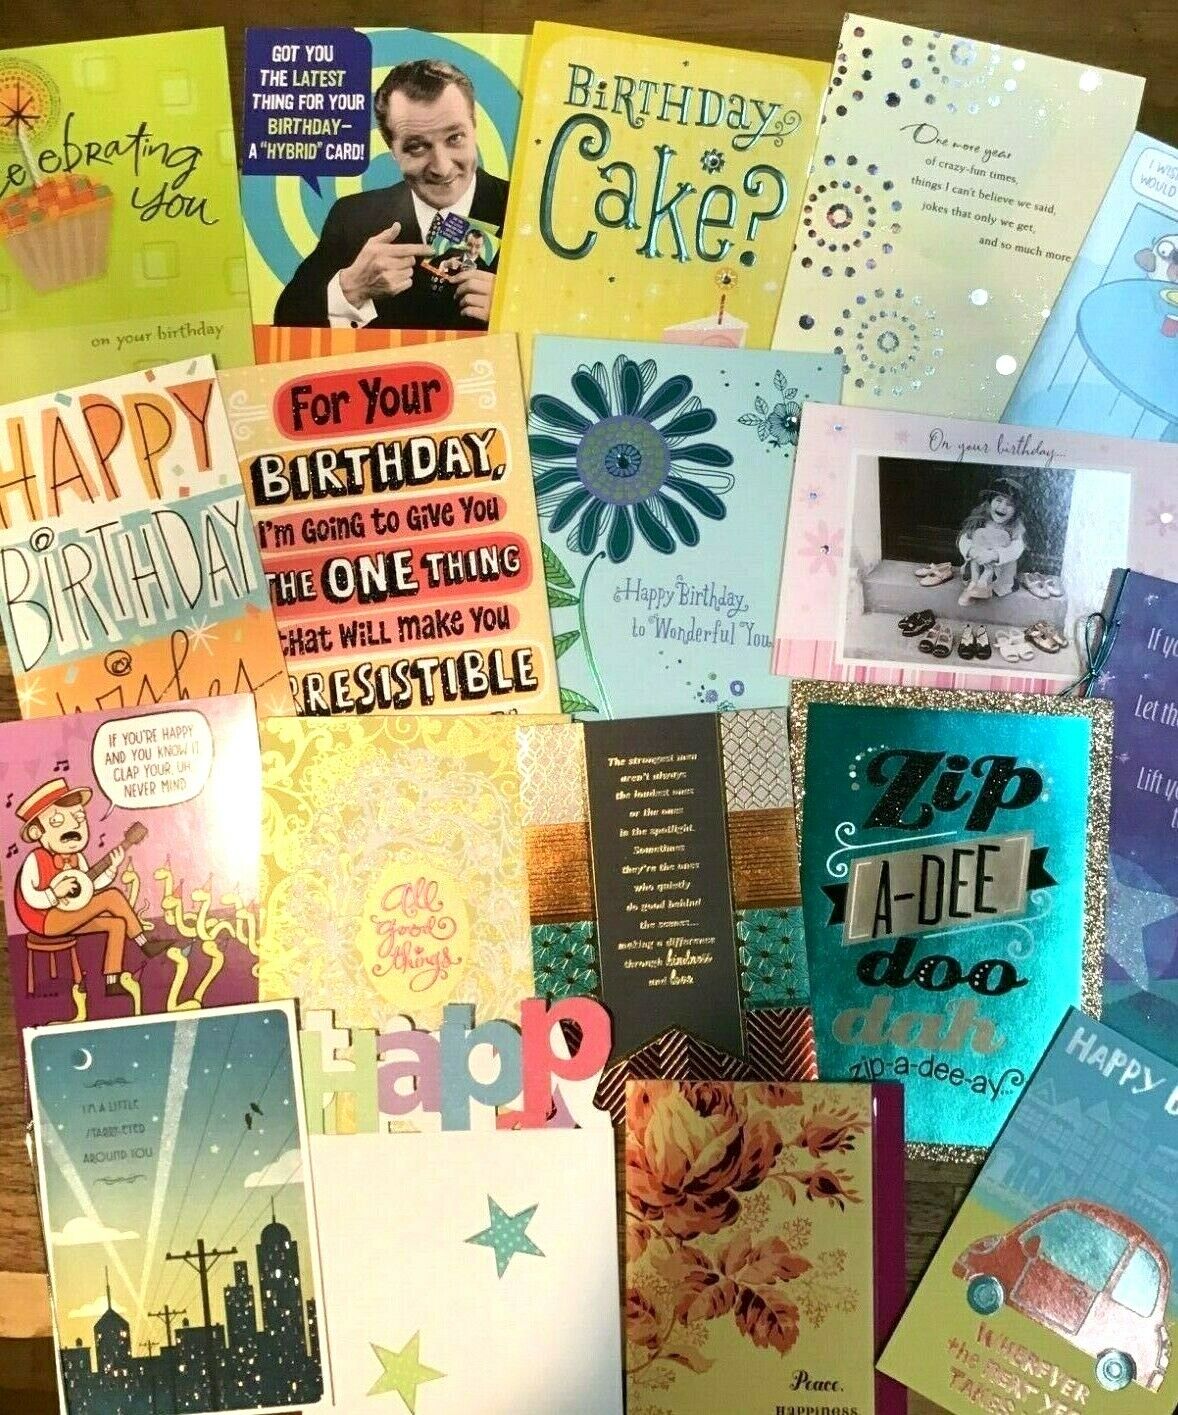 Hallmark CLOSEOUT BIRTHDAY Card Lot Of 10 Assorted Birthday Cards Value OVER $35 Hallmark - фотография #2